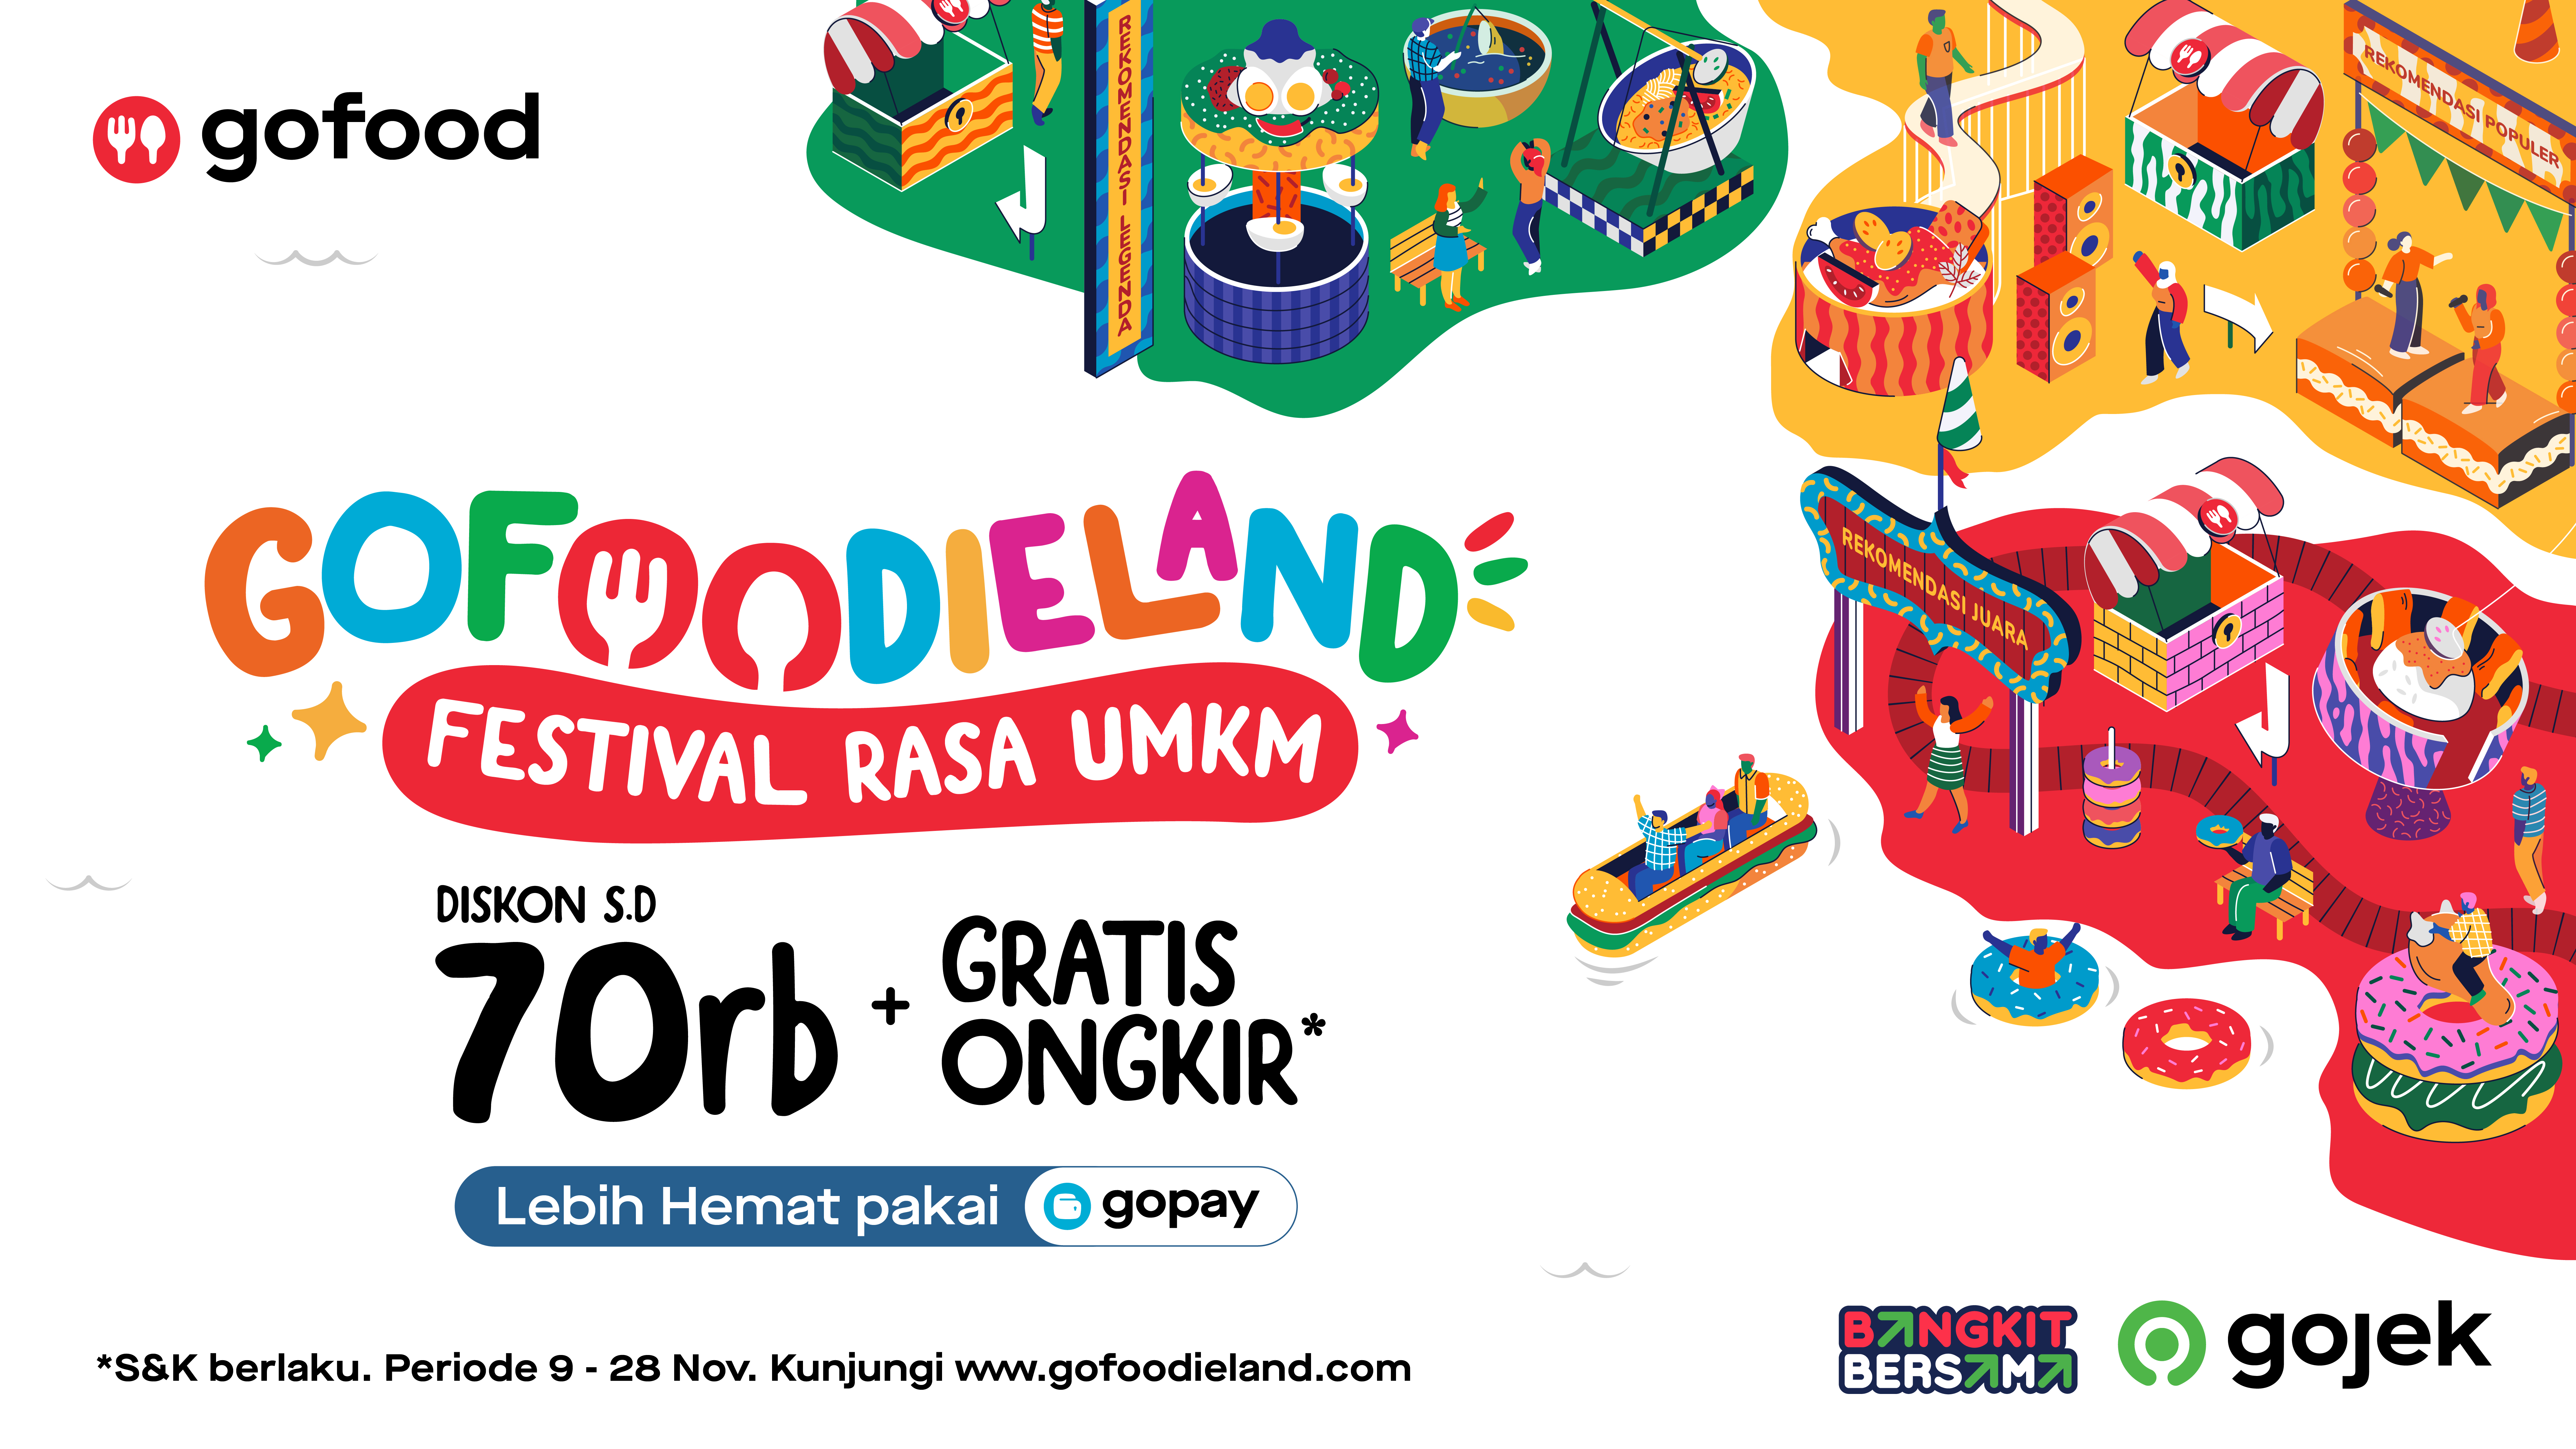 GoFoodieland Festival Rasa UMKM Terbesar 1